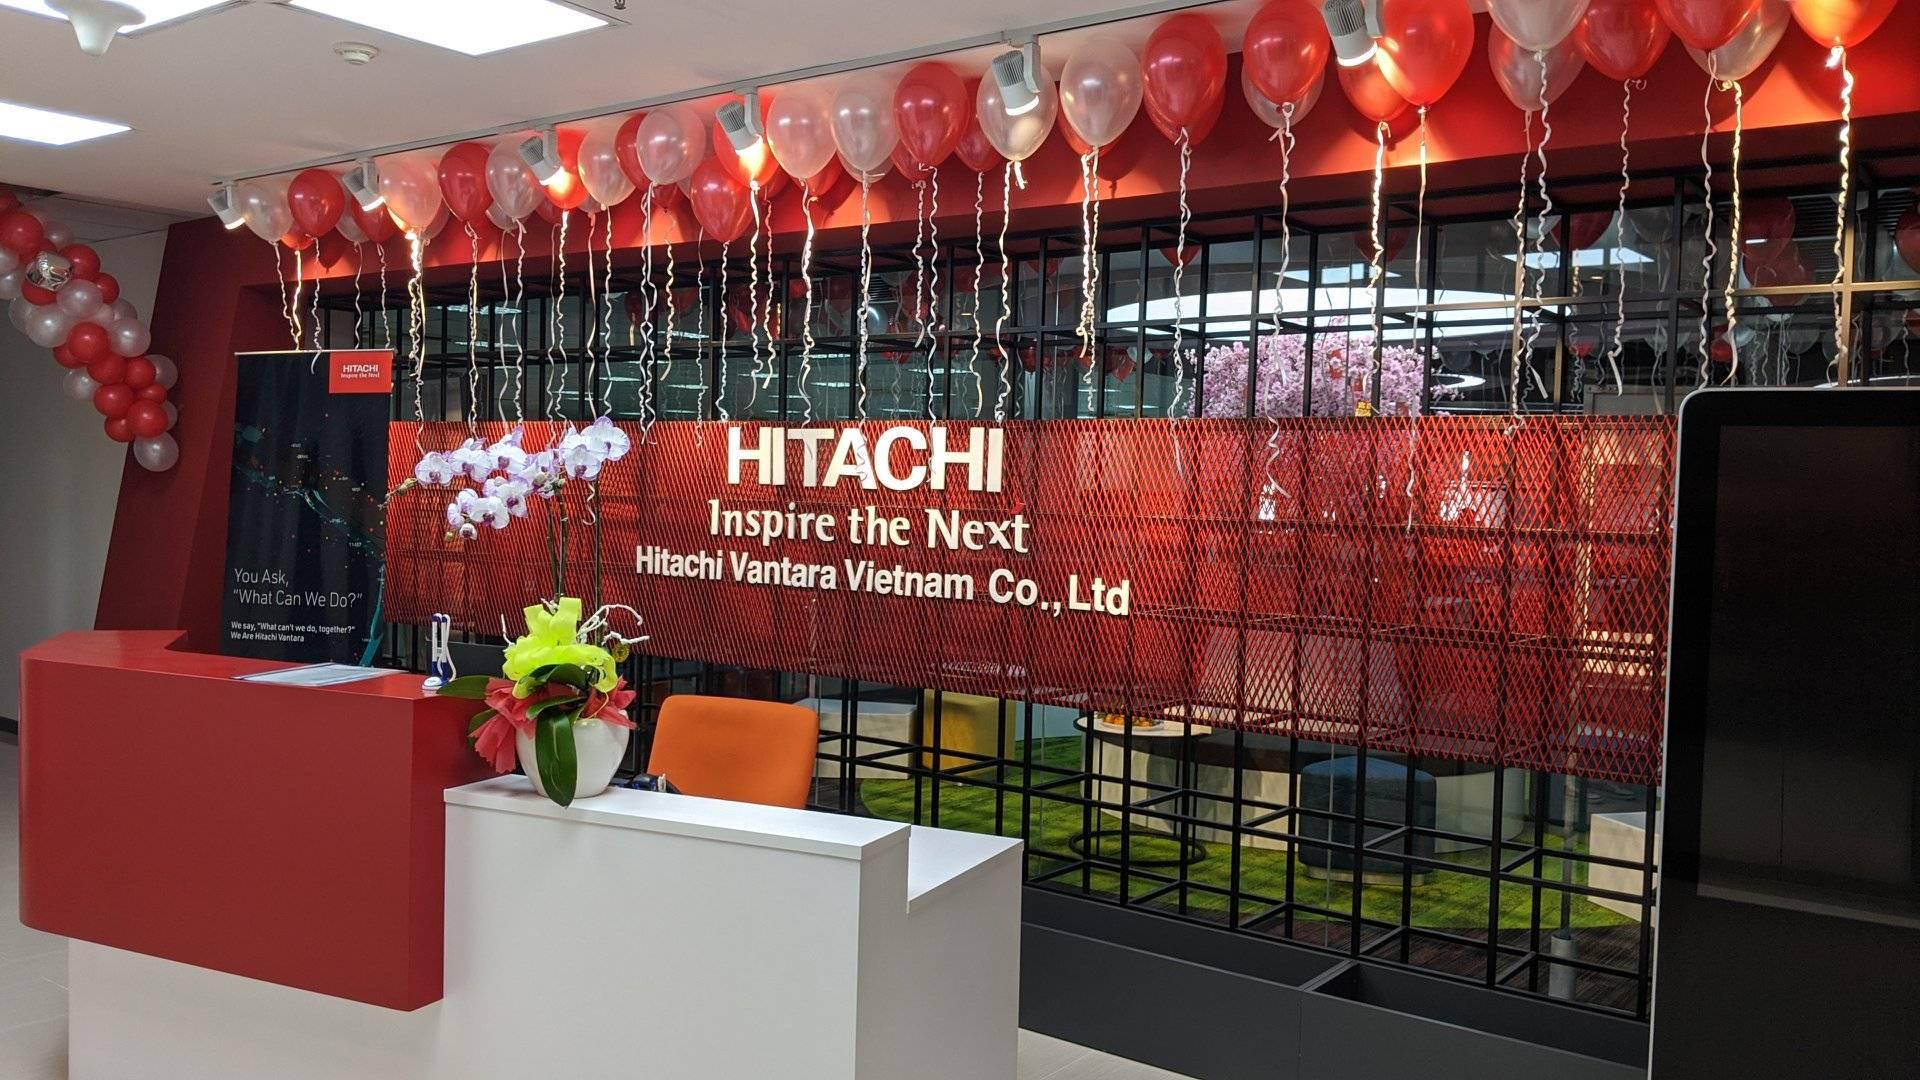 Hitachi Digital Services